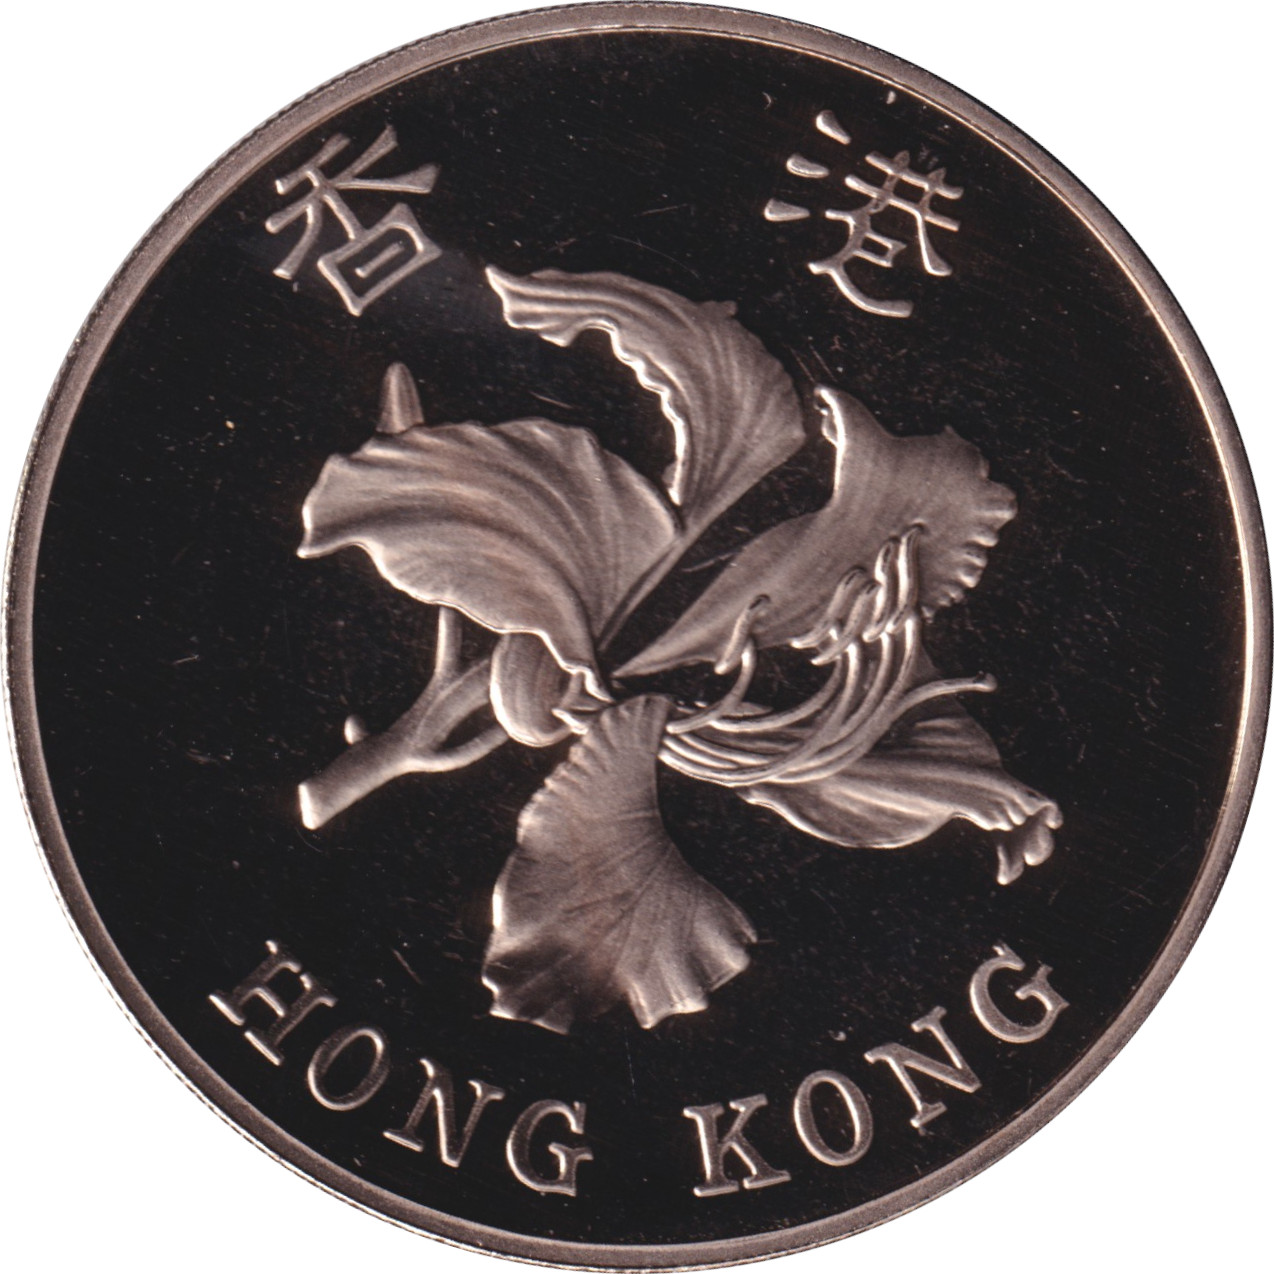 5 dollars - Rétrocession de Hong Kong